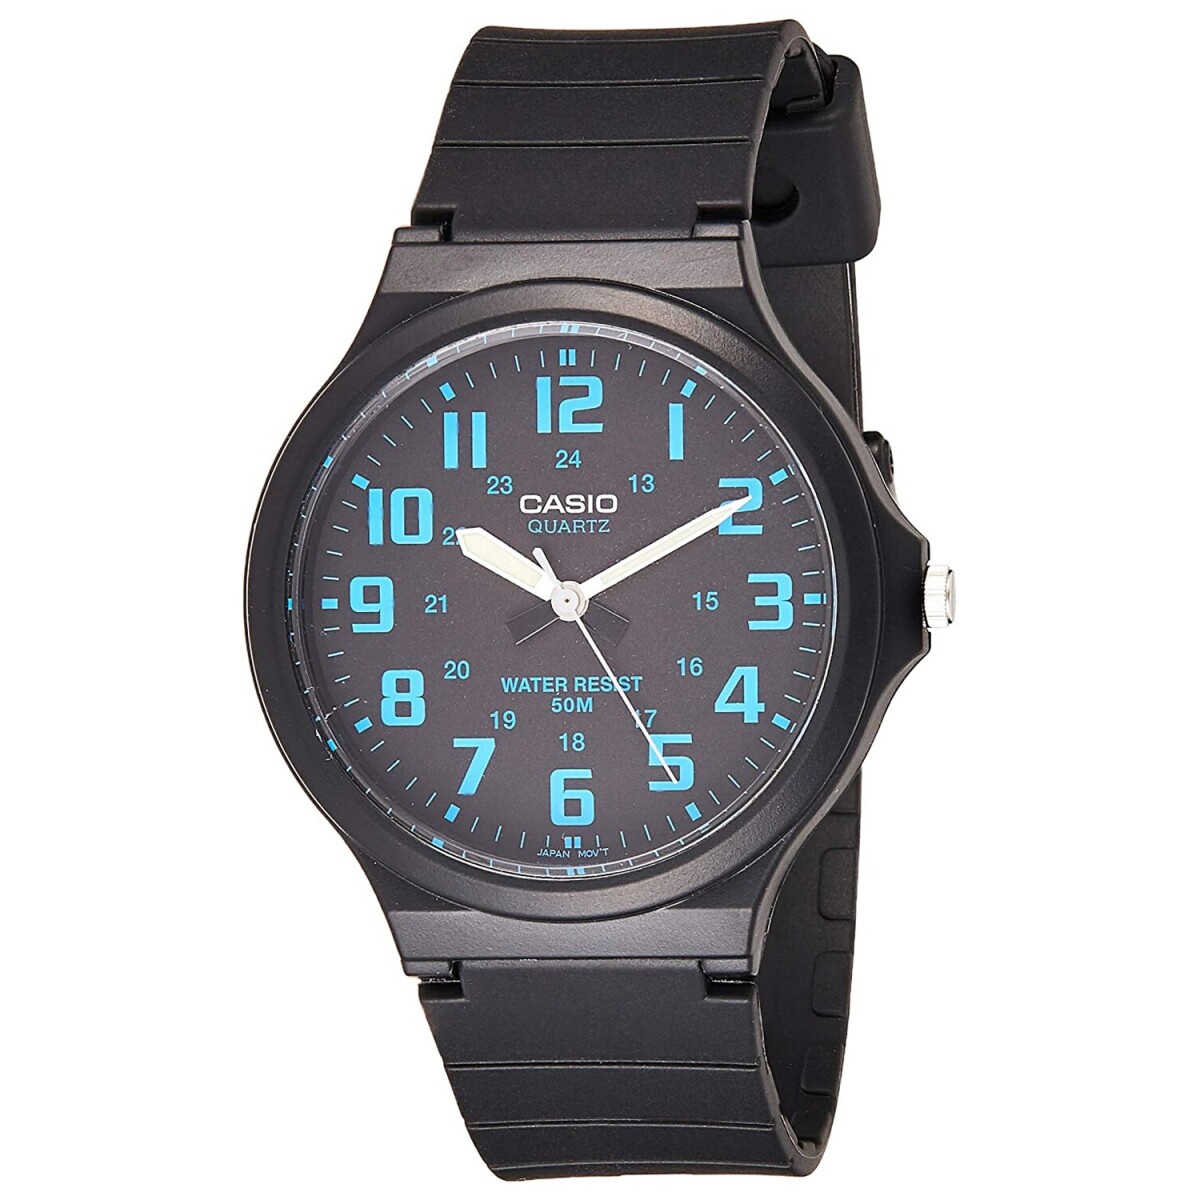 Reloj análogo Casio caballero - Azul marino 